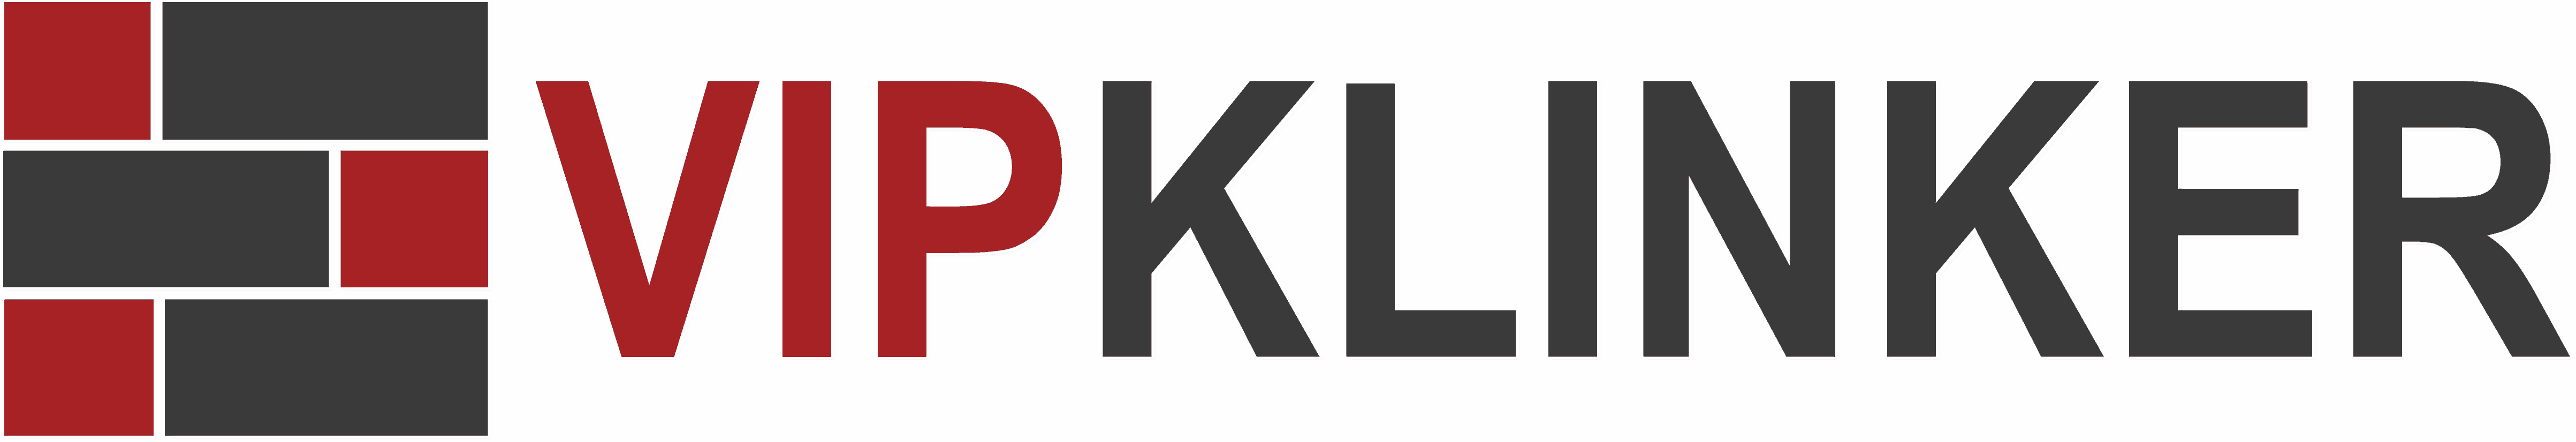 Vip Klinker Logo White Shadow